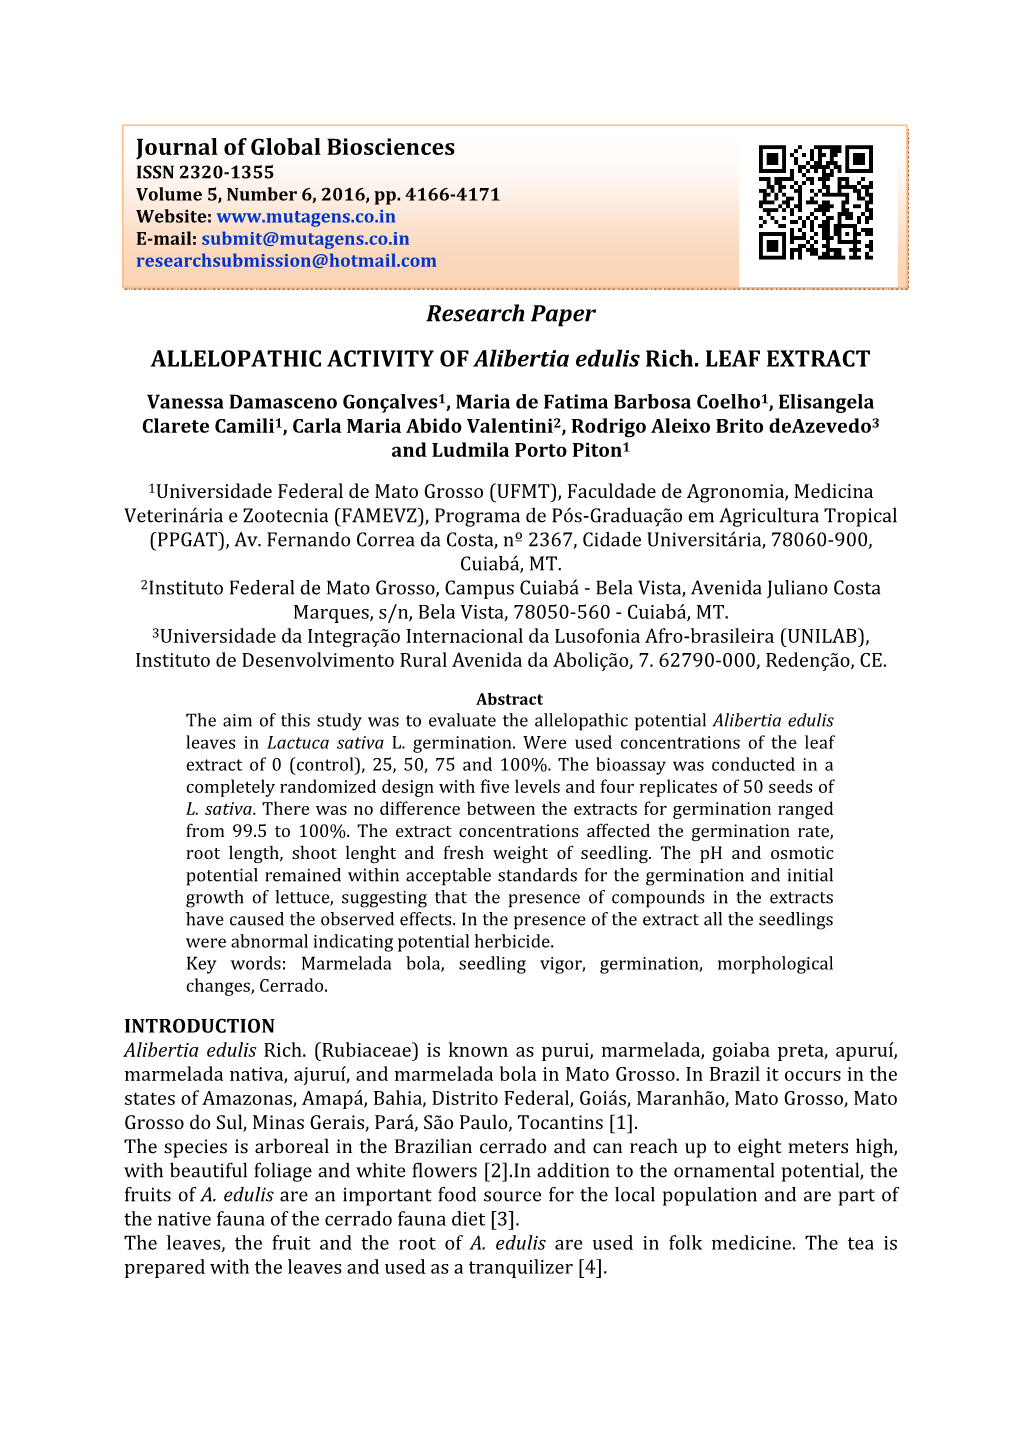 Research Paper ALLELOPATHIC ACTIVITY of Alibertia Edulis Rich